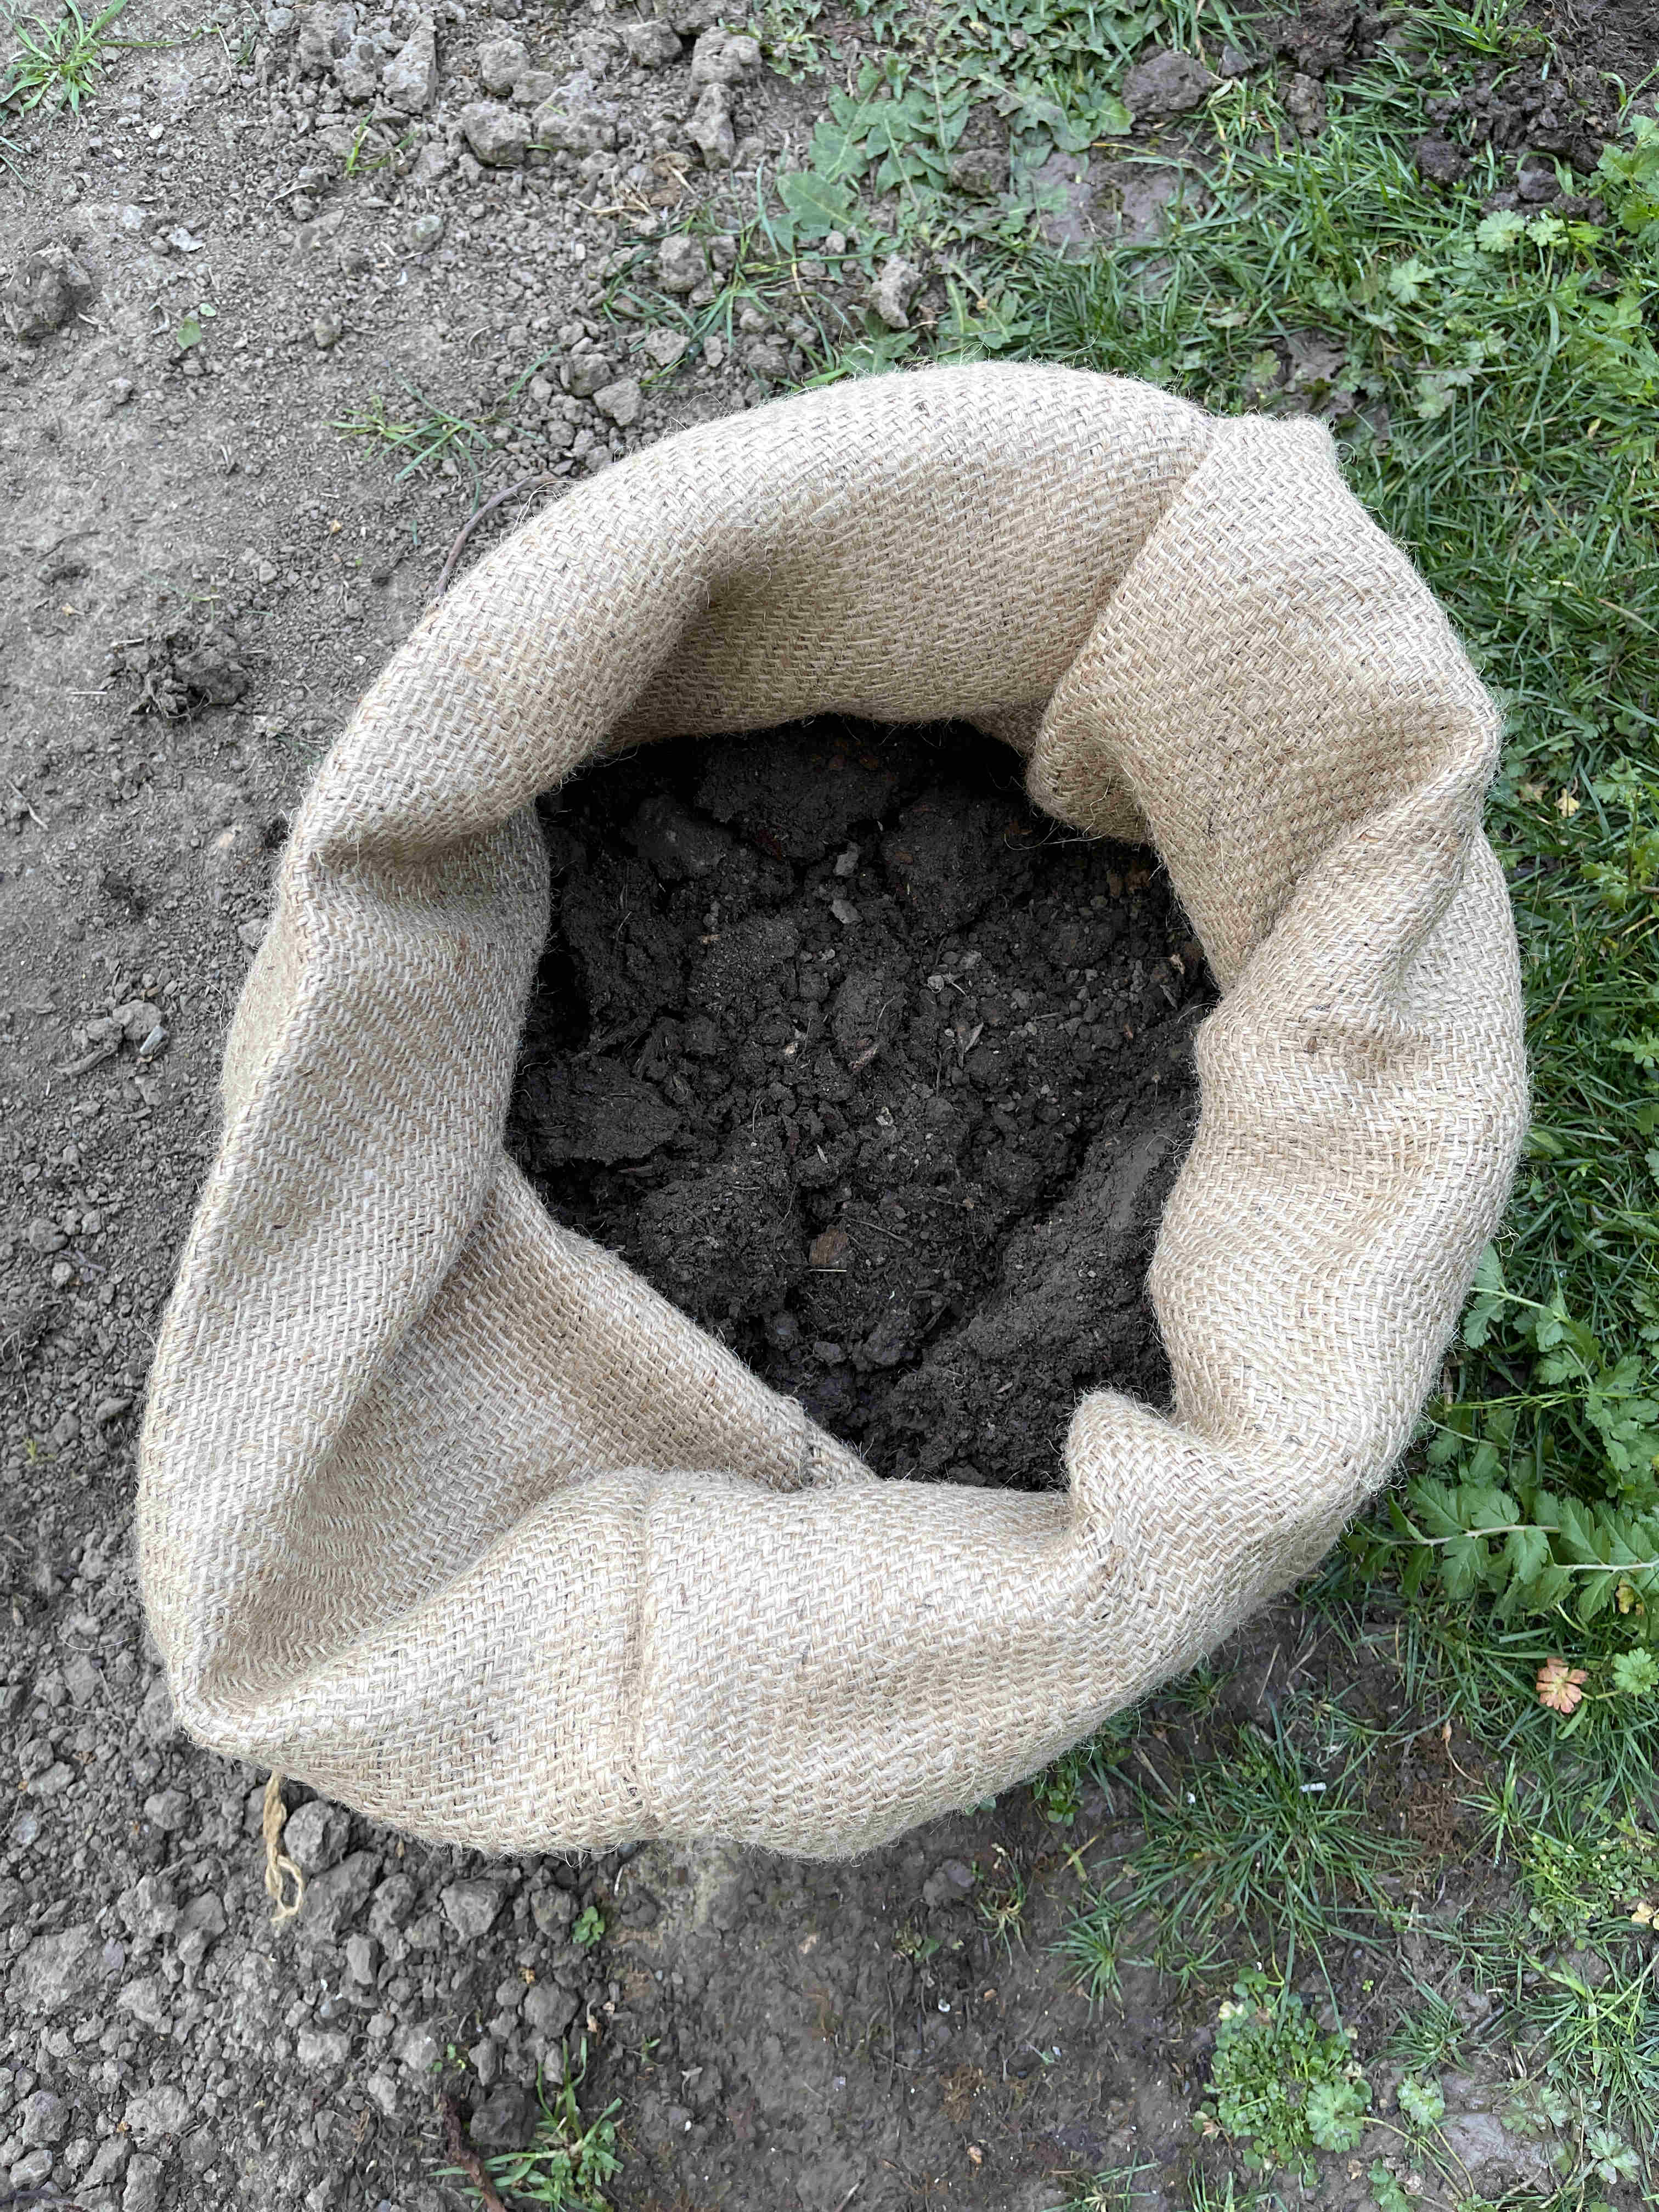 burlap sack planter partially filled